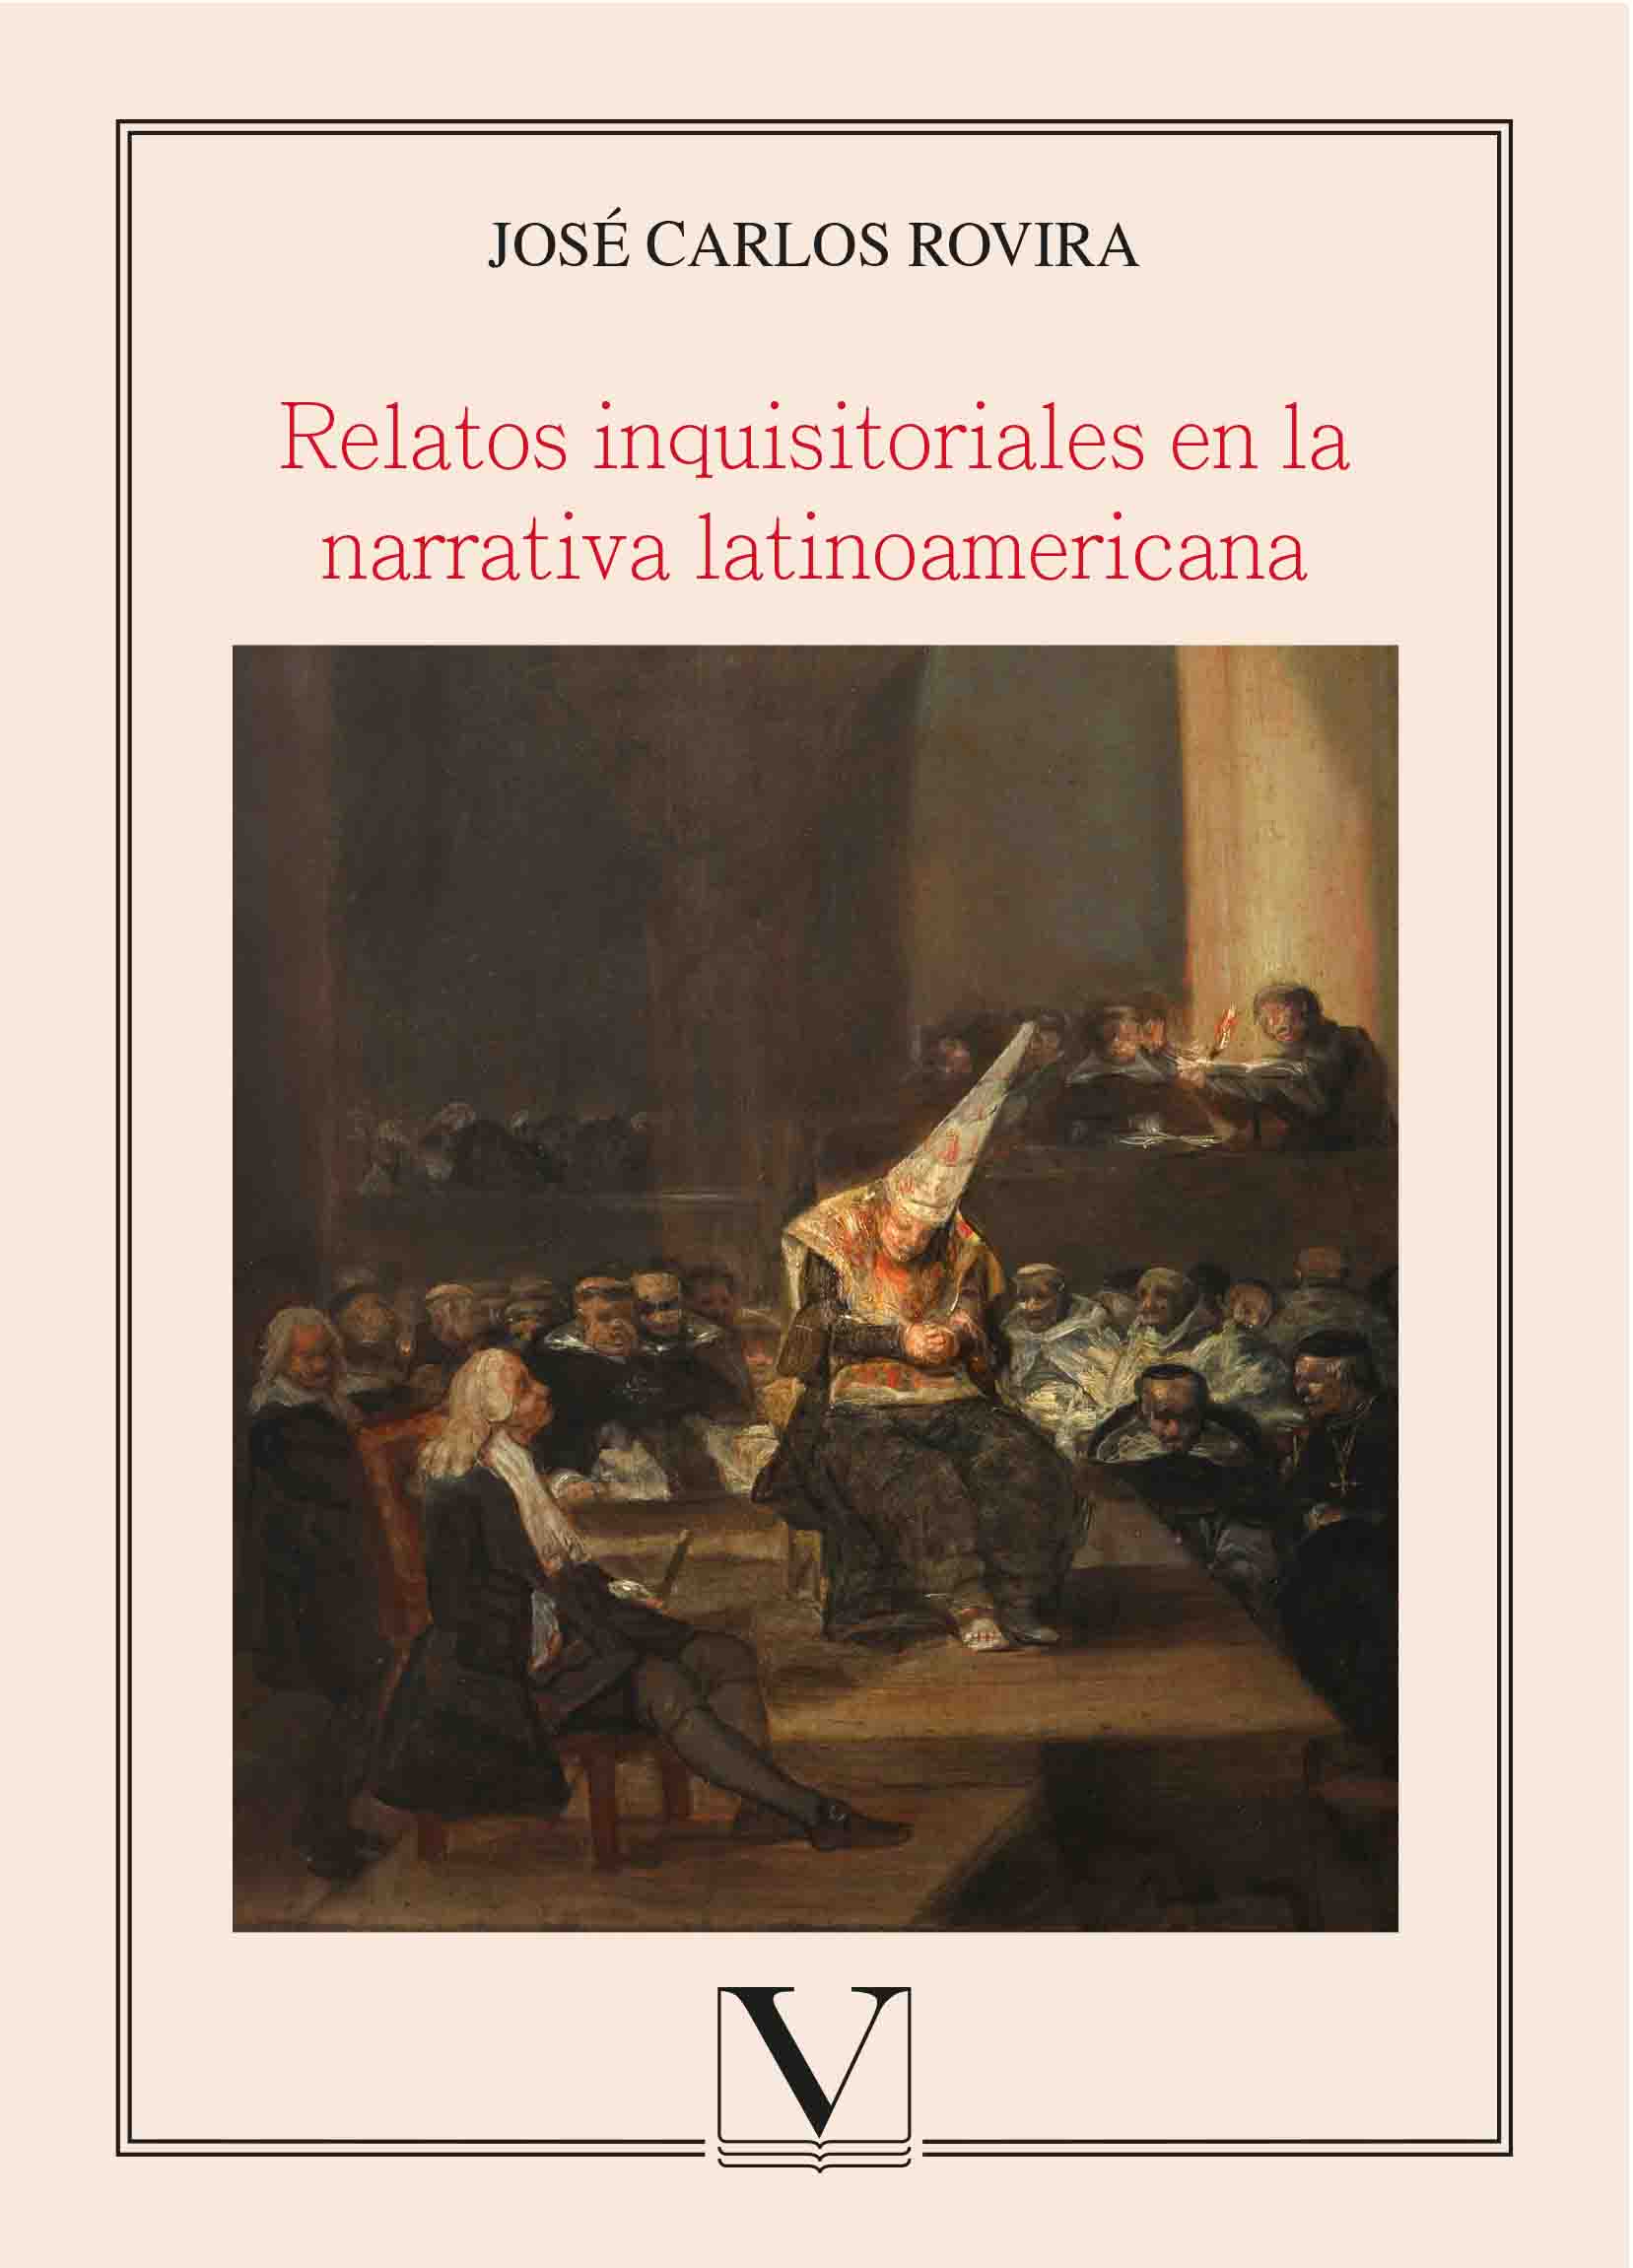 Imagen de portada del libro Relatos inquisitoriales en la narrativa latinoamericana